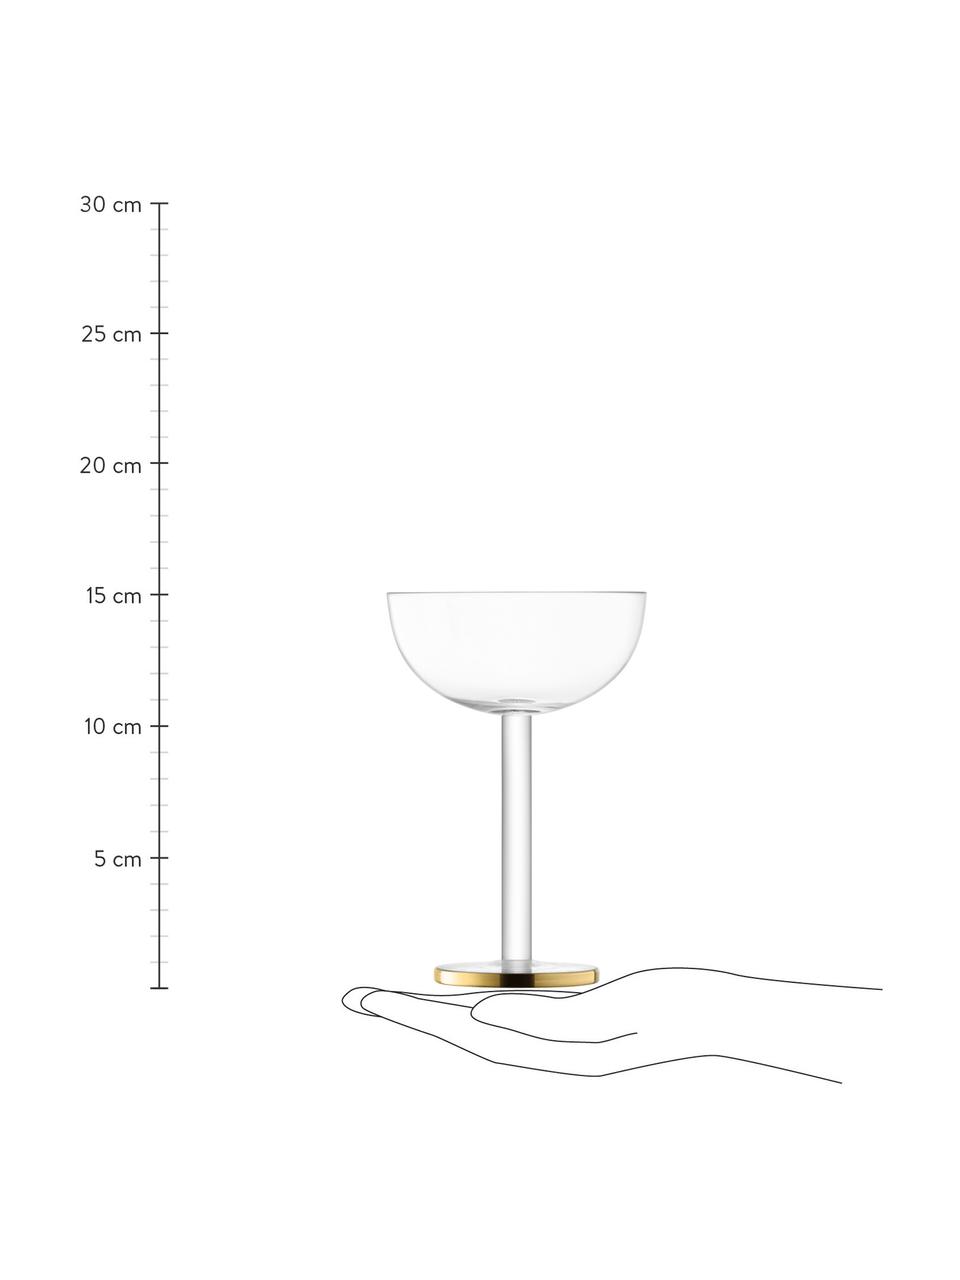 Mondgeblazen champagneglazen Luca met goudkleurige rand, 2 stuks, Glas, Transparant, goudkleurig, Ø 11 x H 15 cm, 200 ml